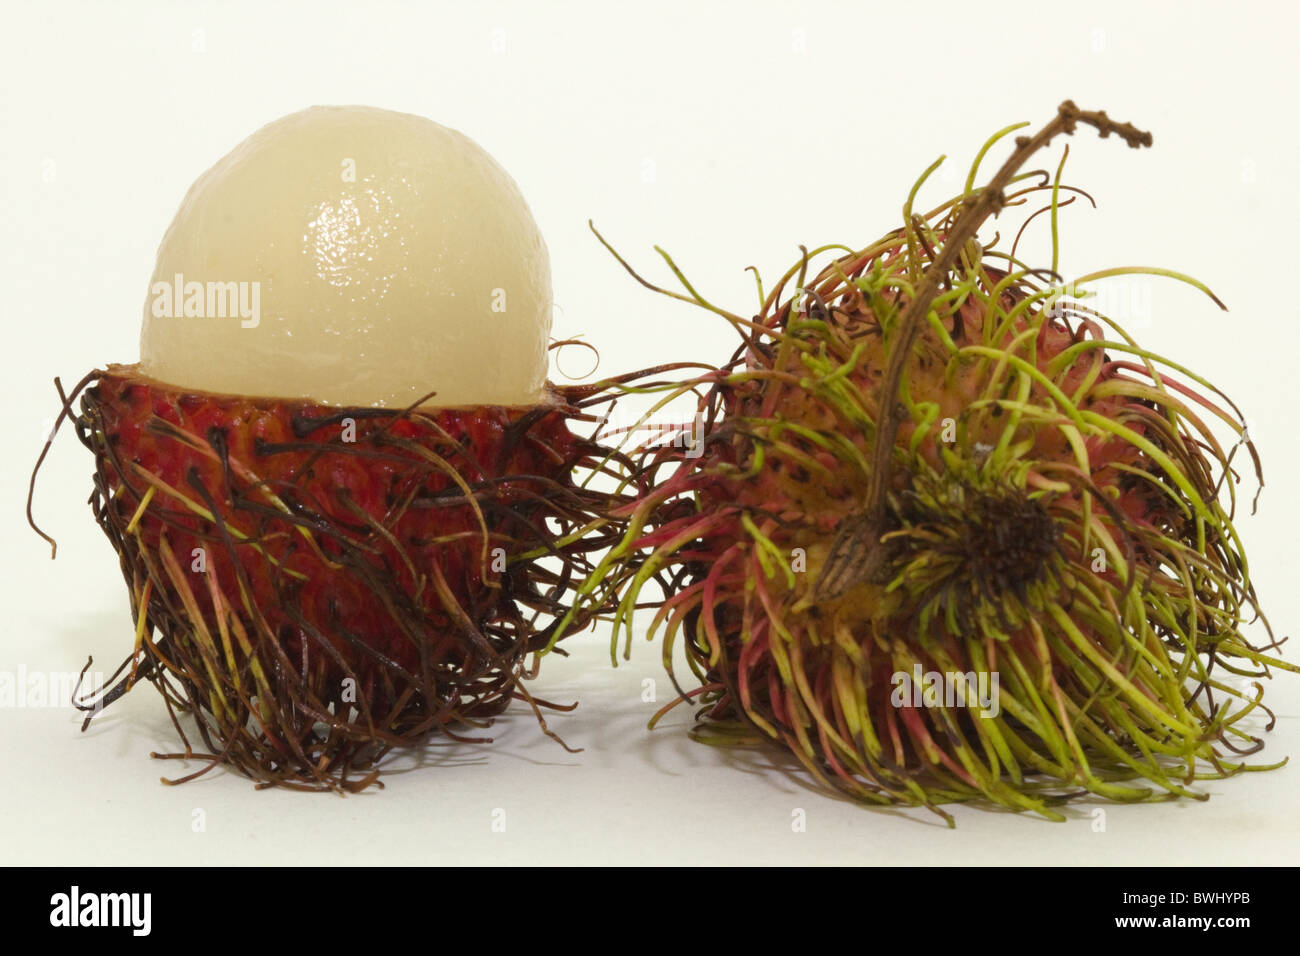 Rambutan fruits (Nephelium lappaceum) whole and open, isolated against white background Stock Photo